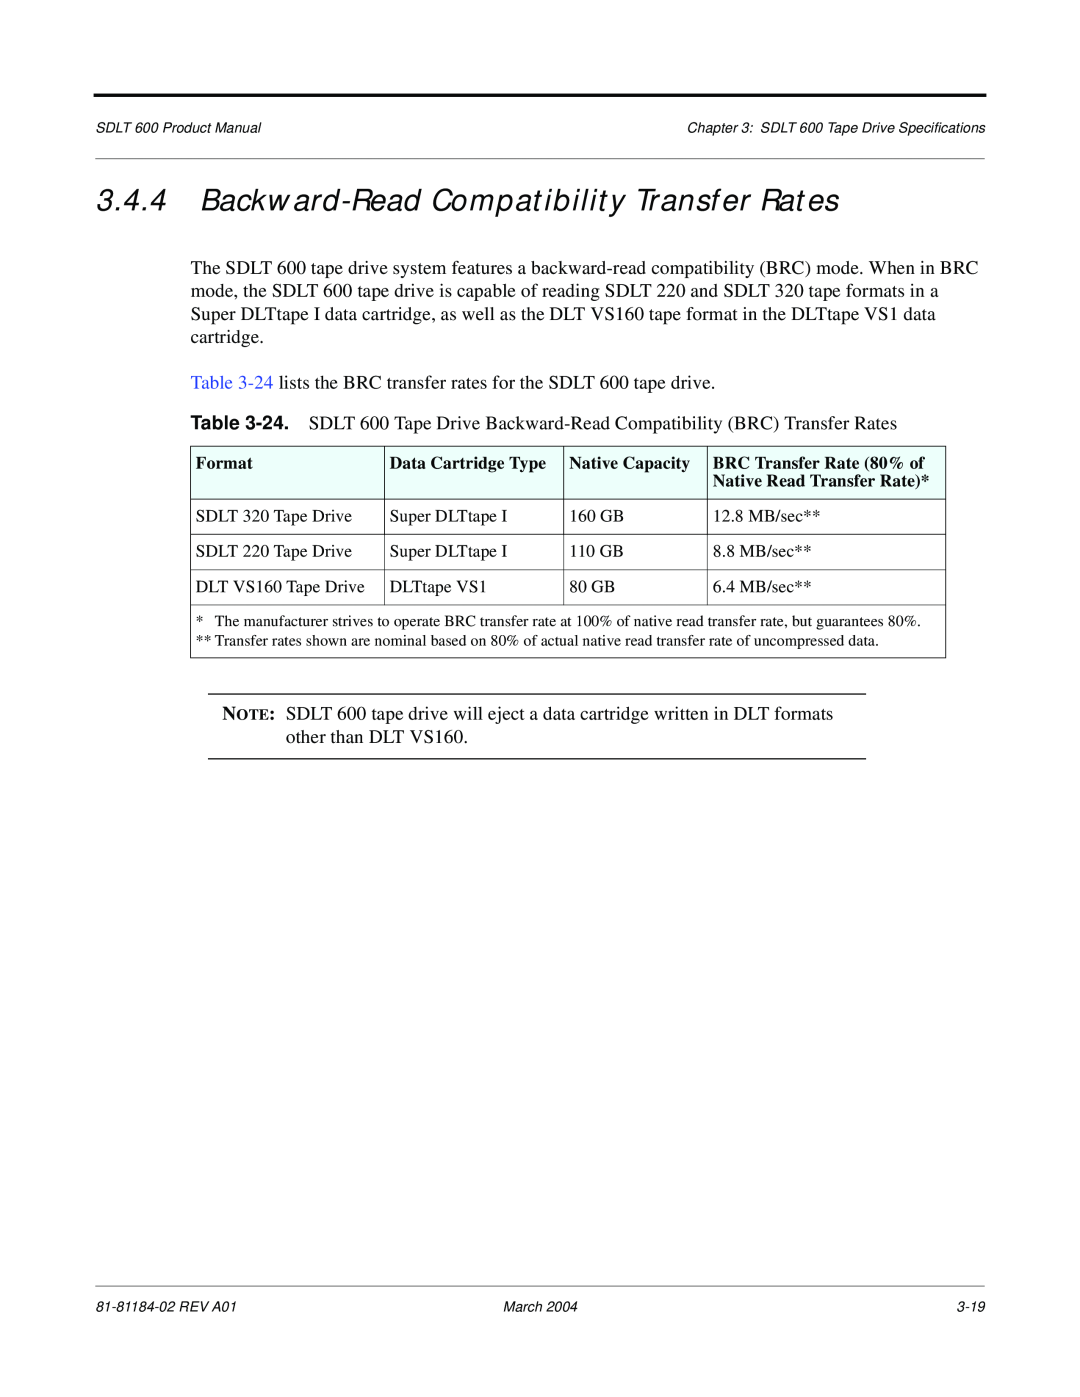 Tandberg Data 600 manual Backward-Read Compatibility Transfer Rates 